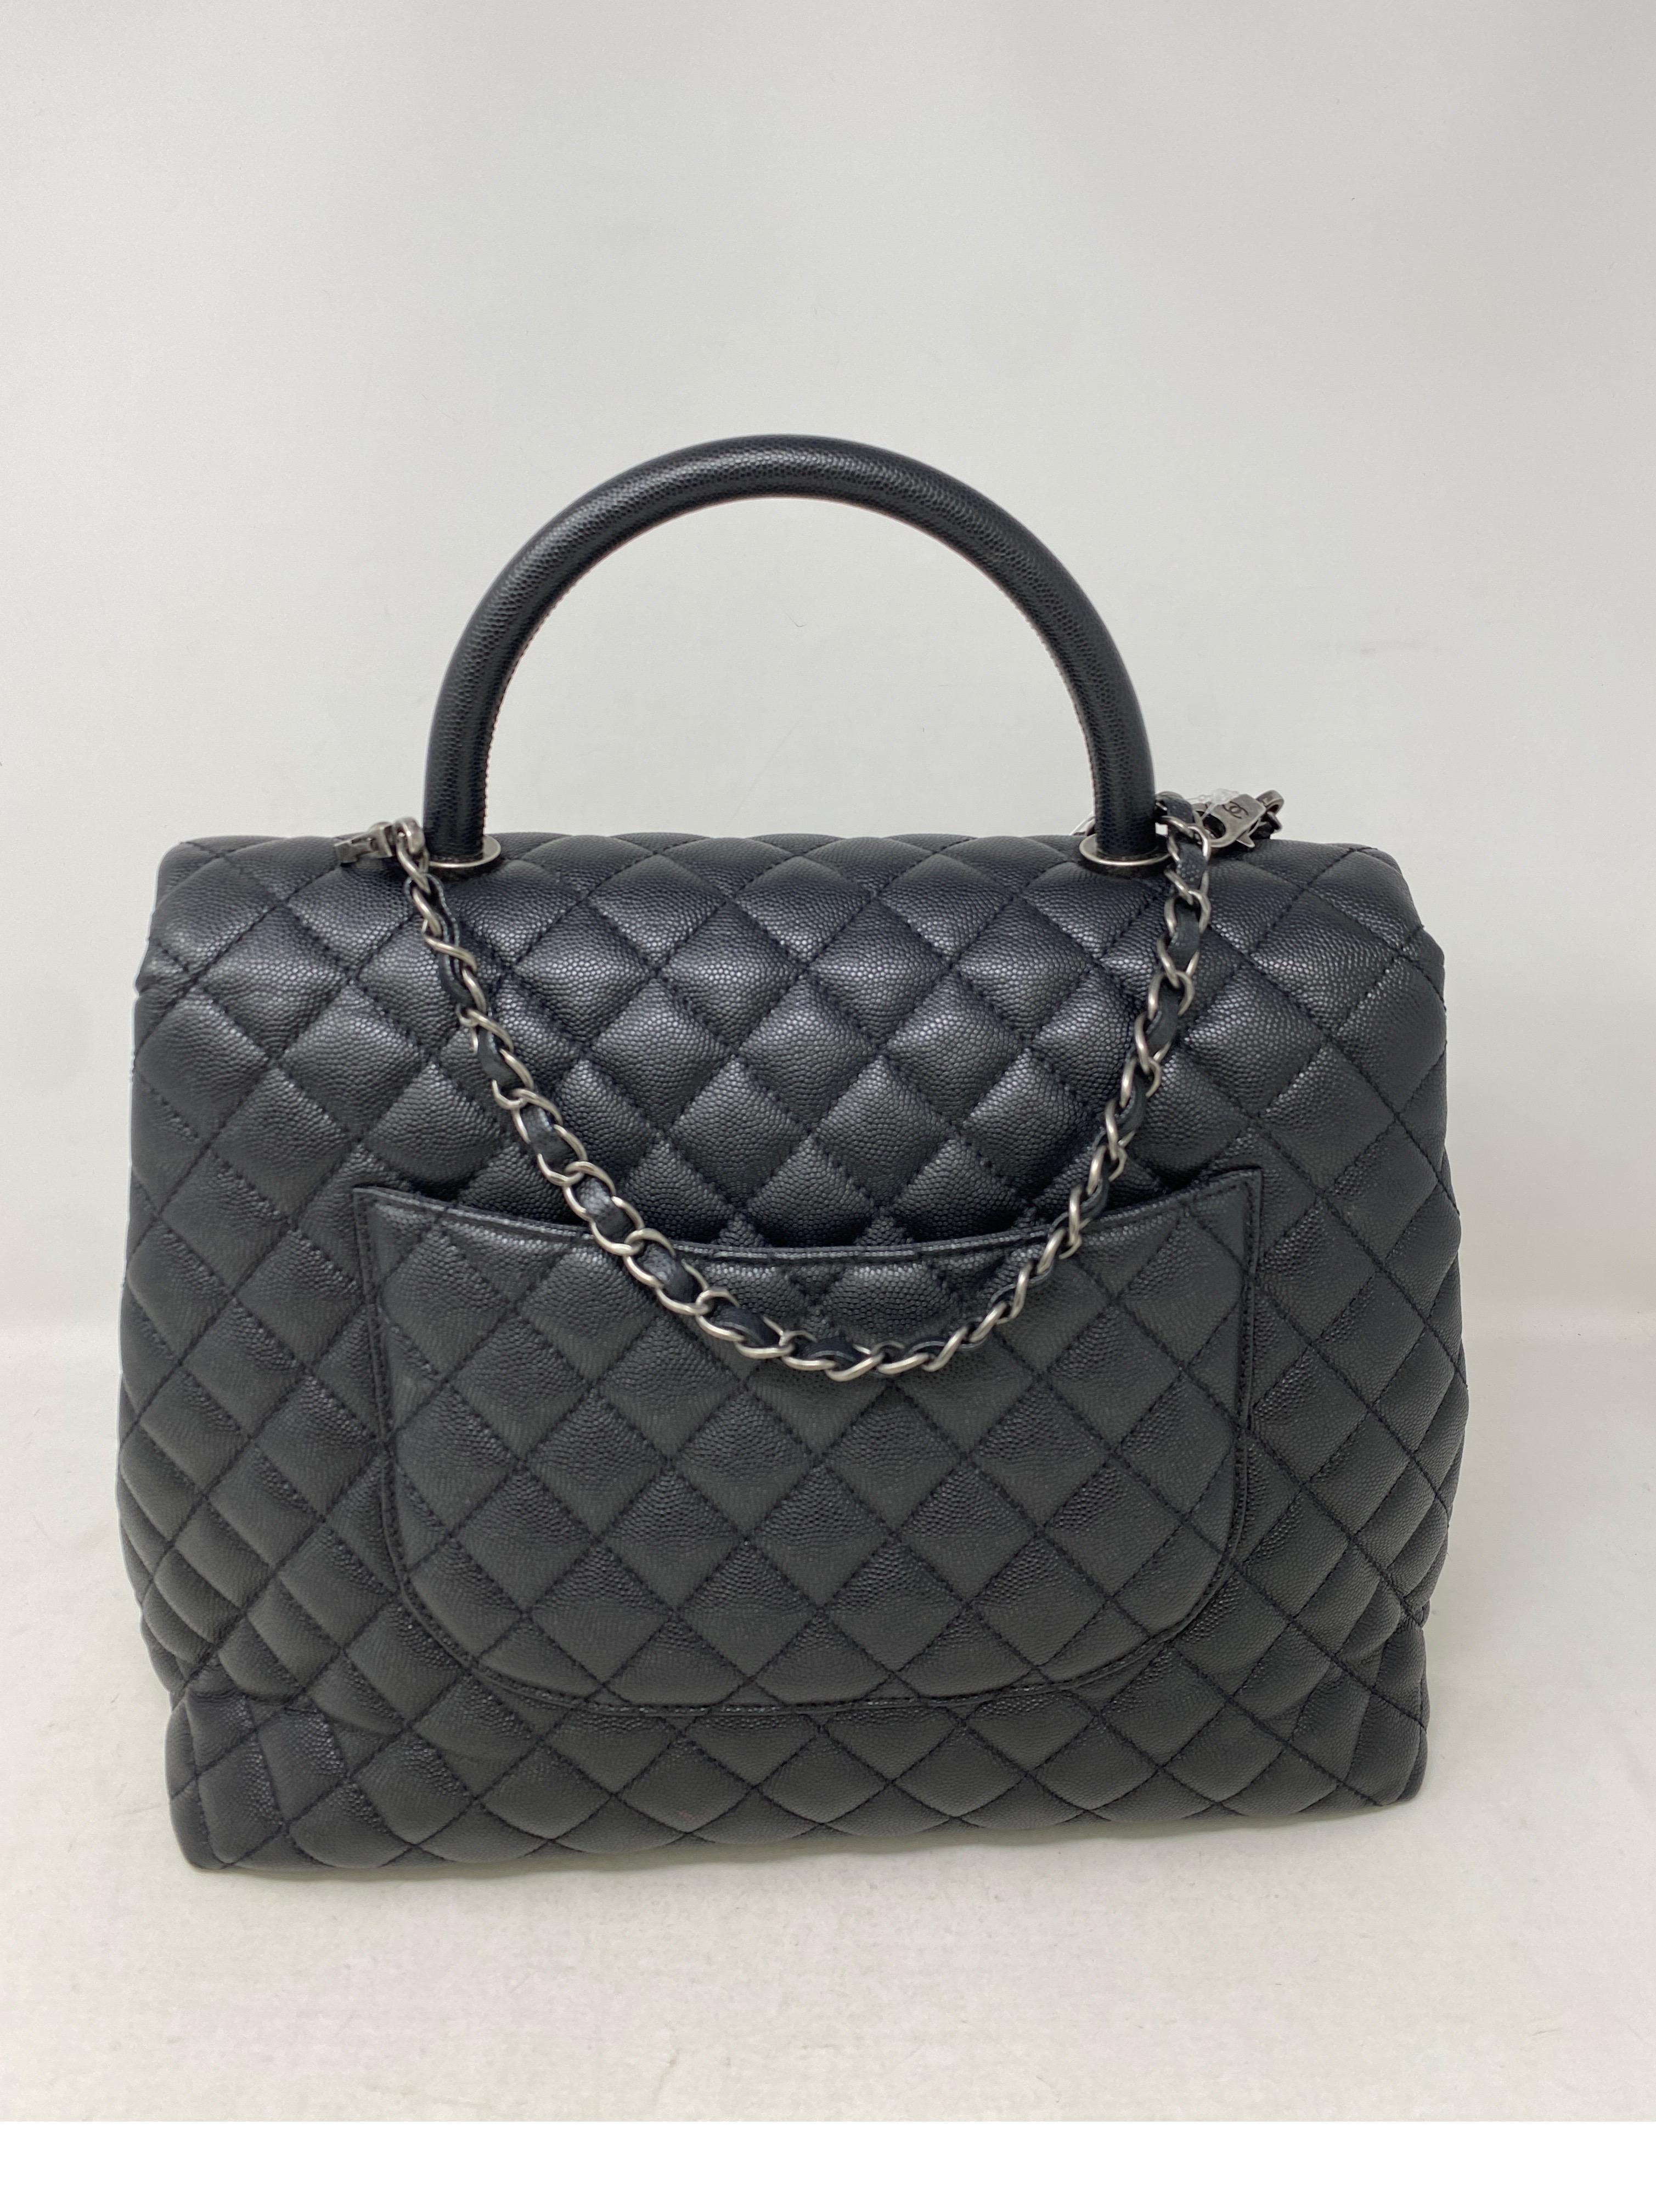 Black Chanel Coco Handle Large Bag